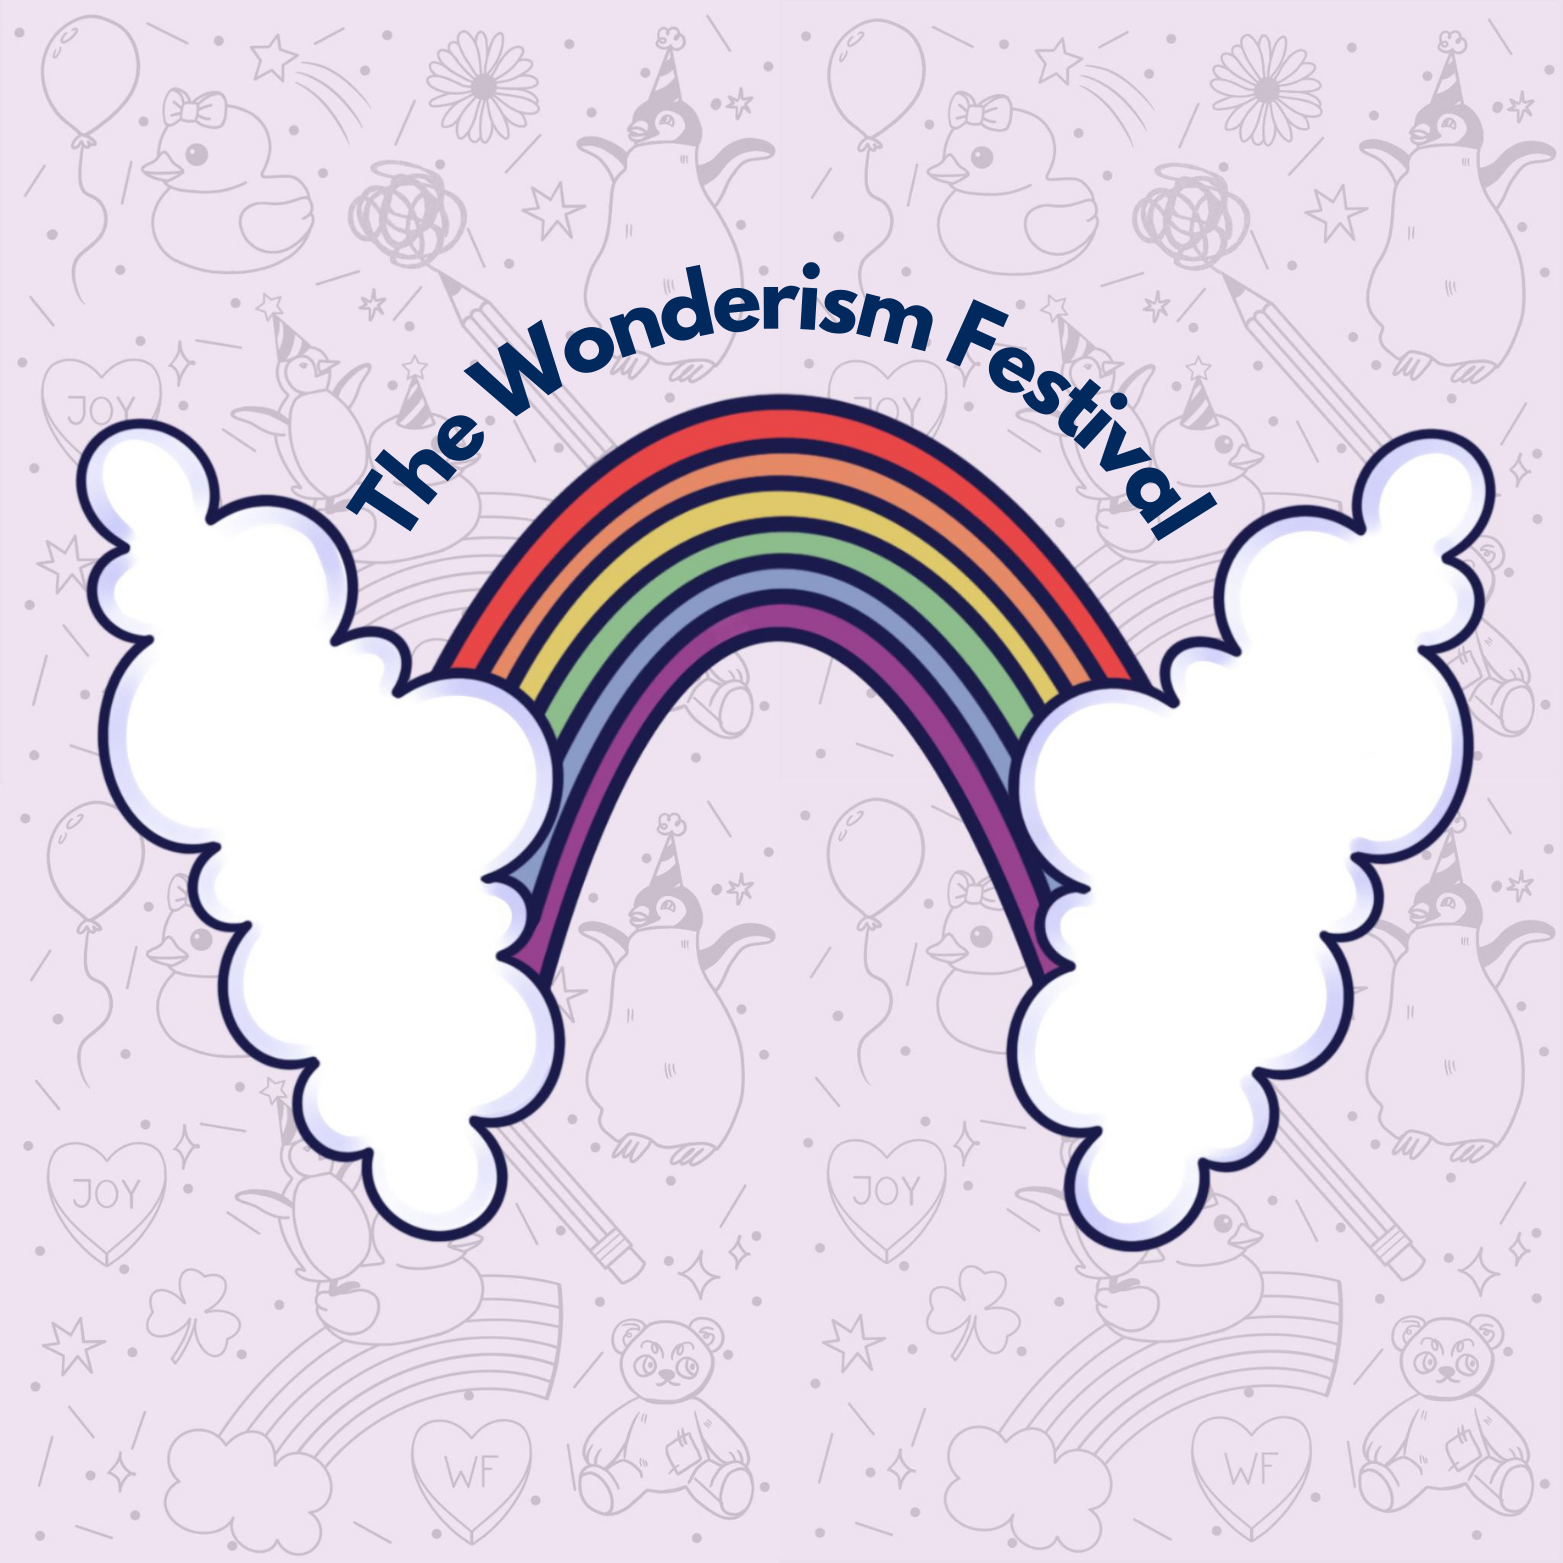 The Wonderism Festival 